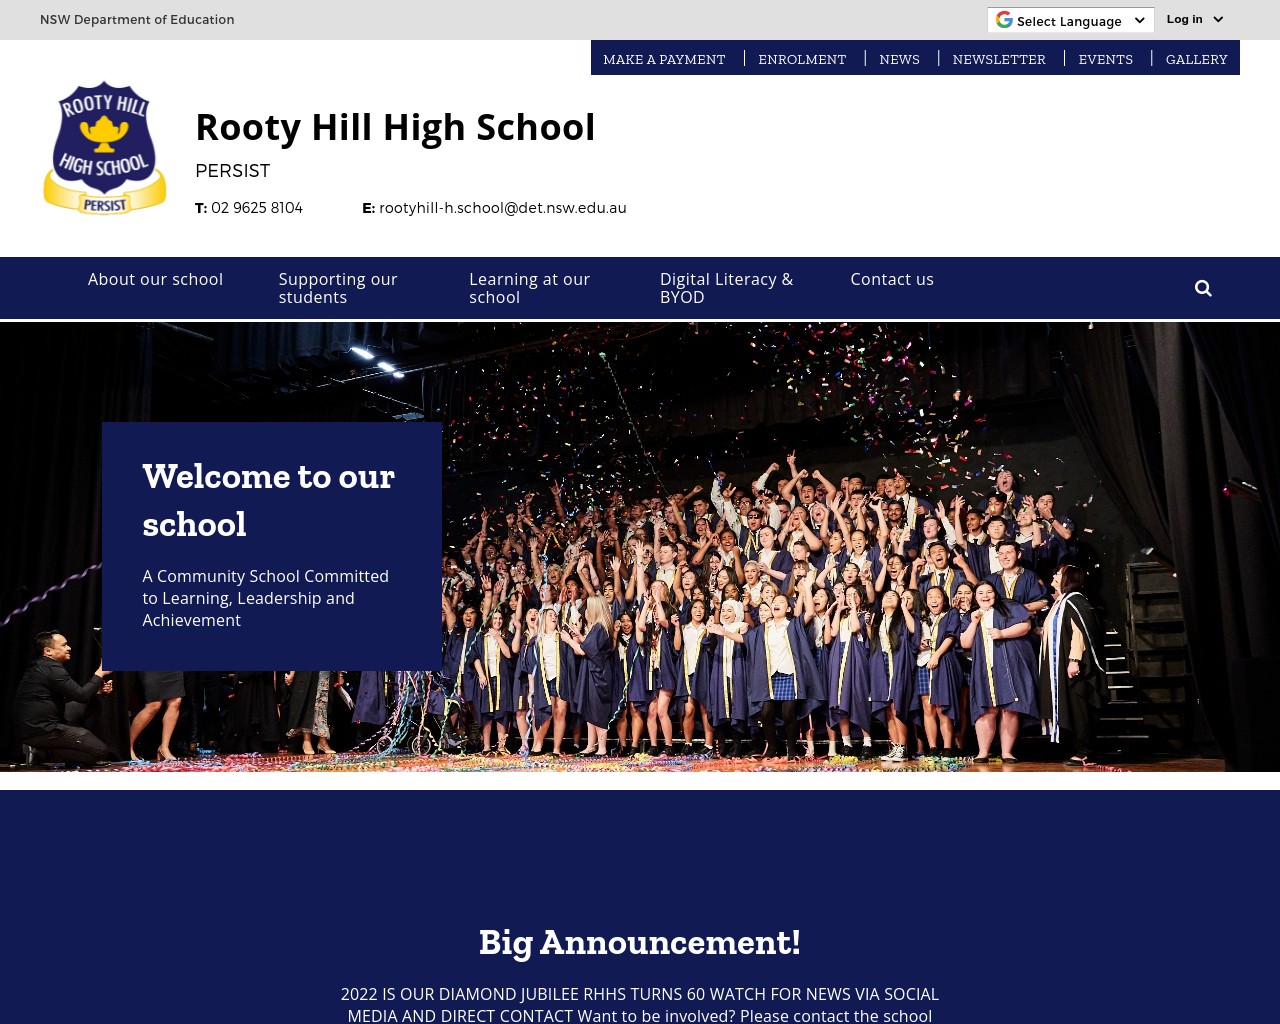 Rooty Hill High School